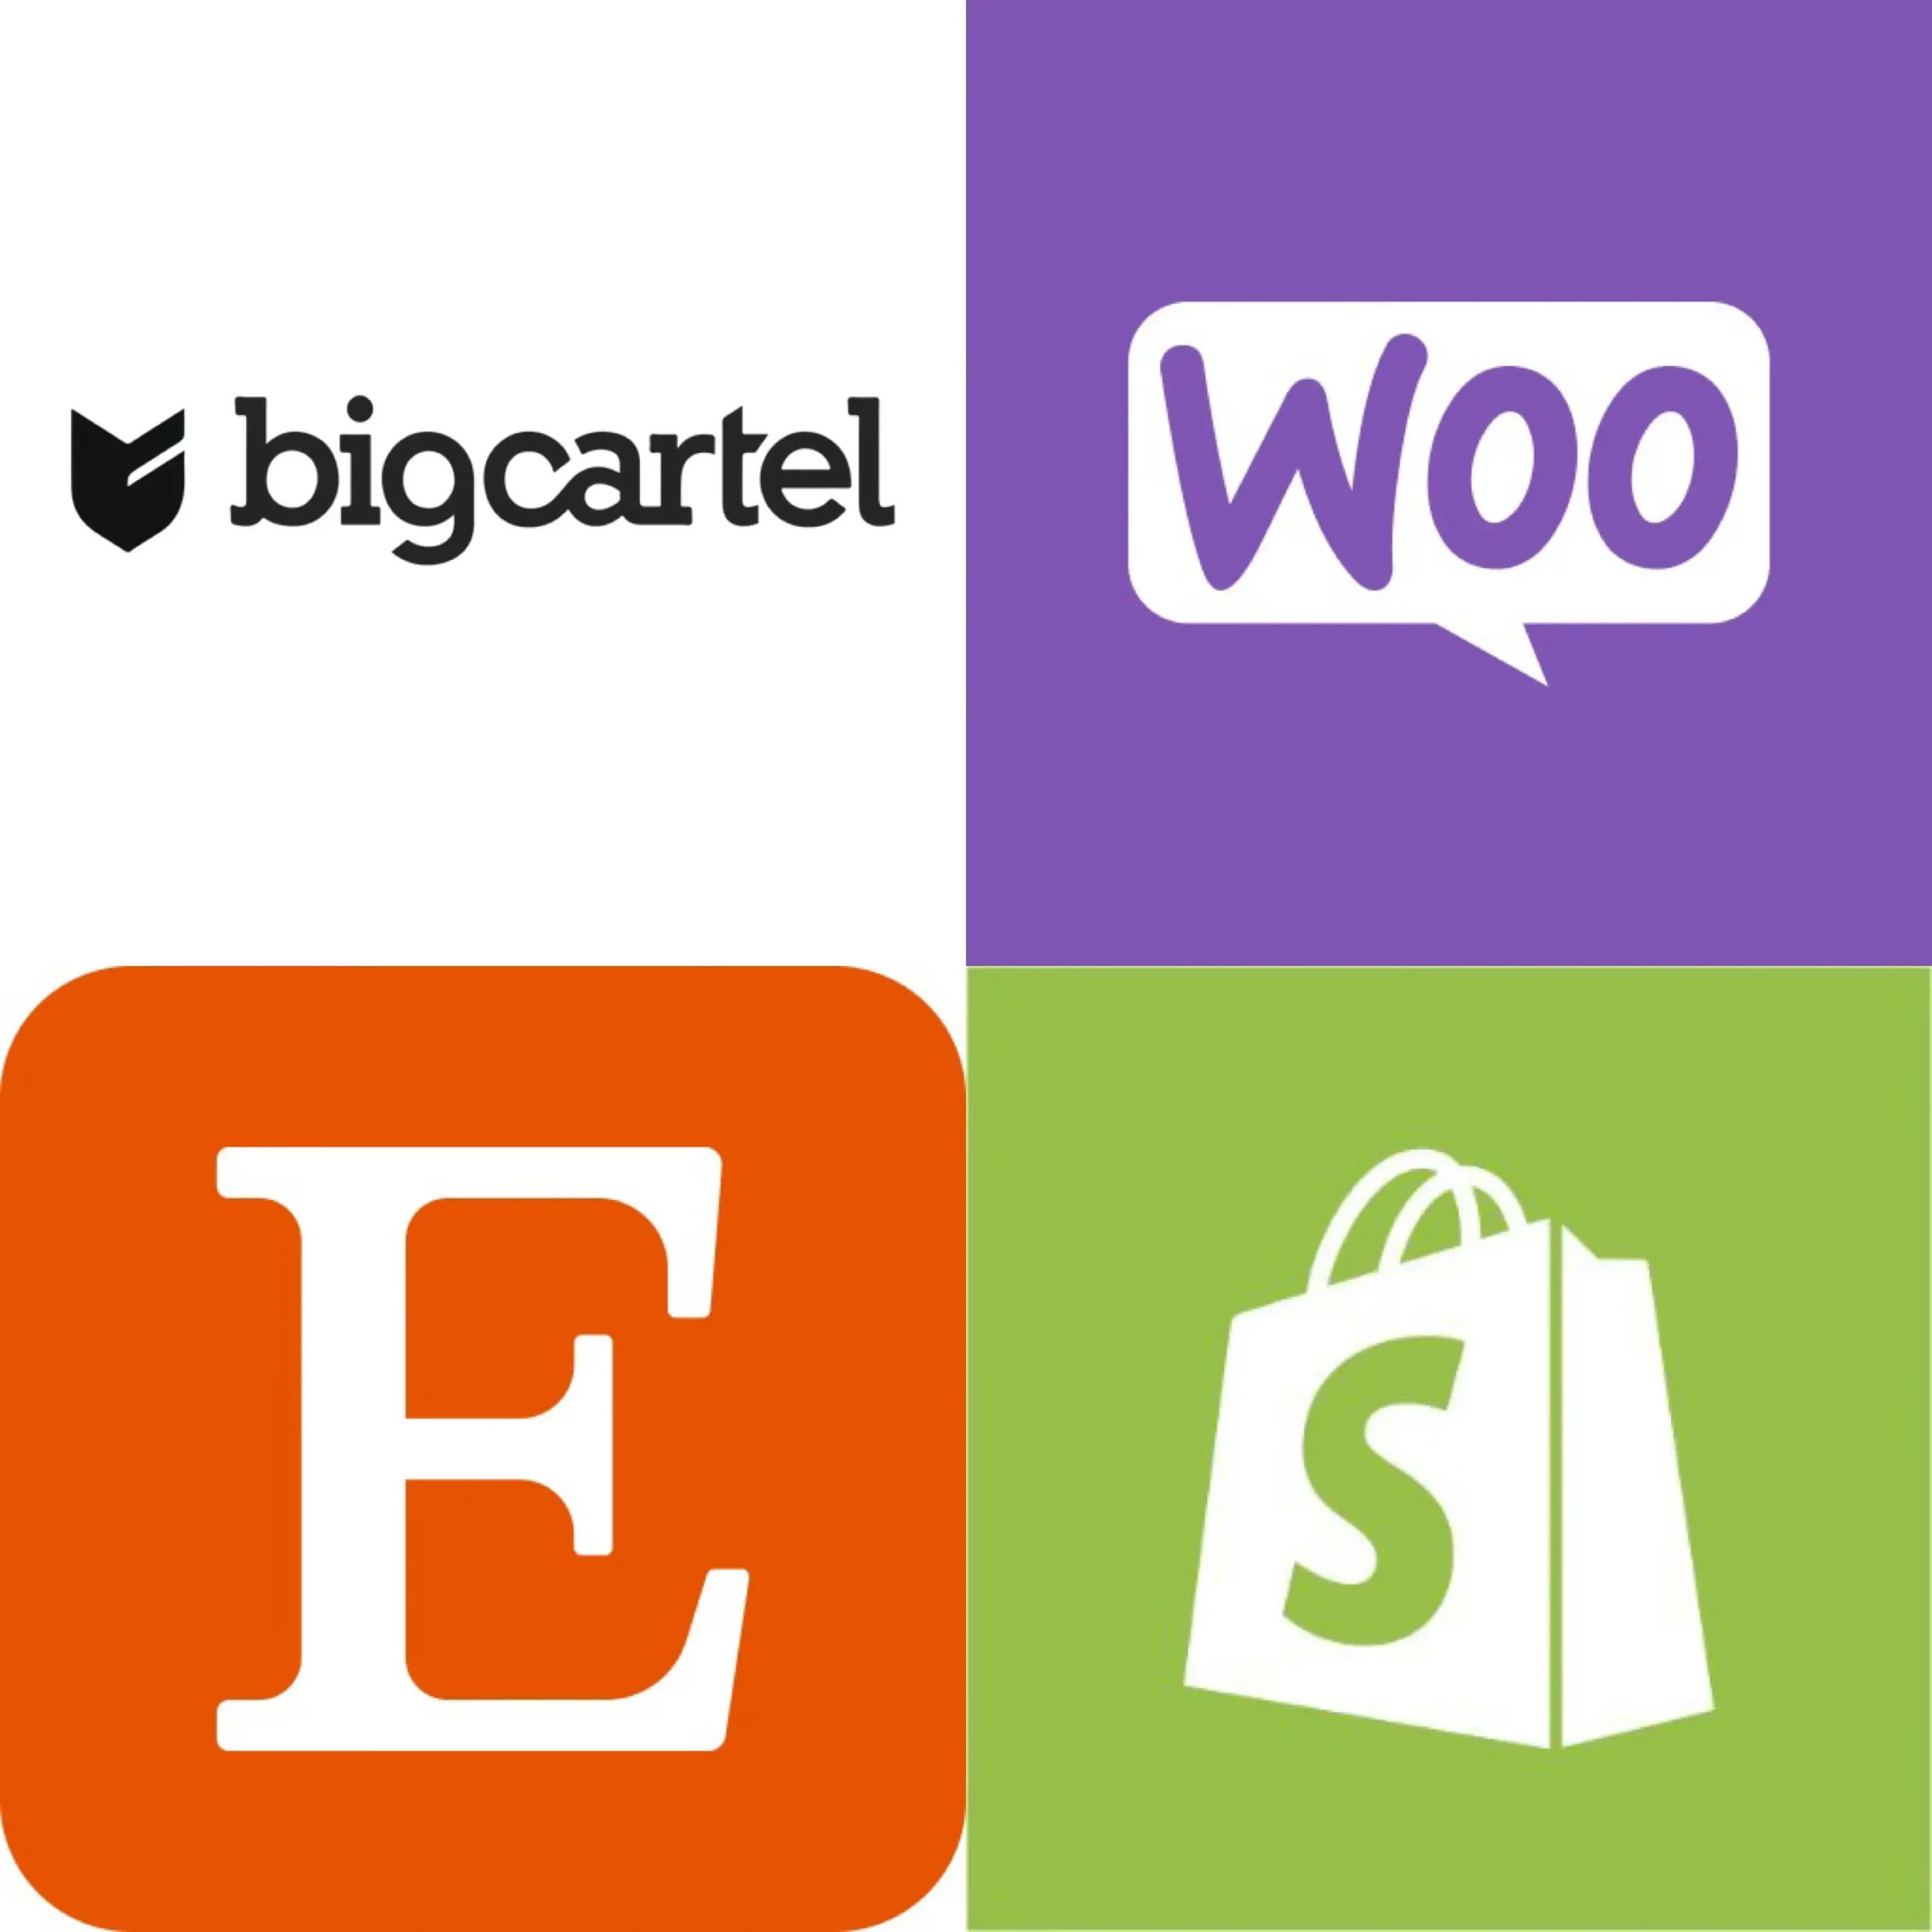 online shop logos square